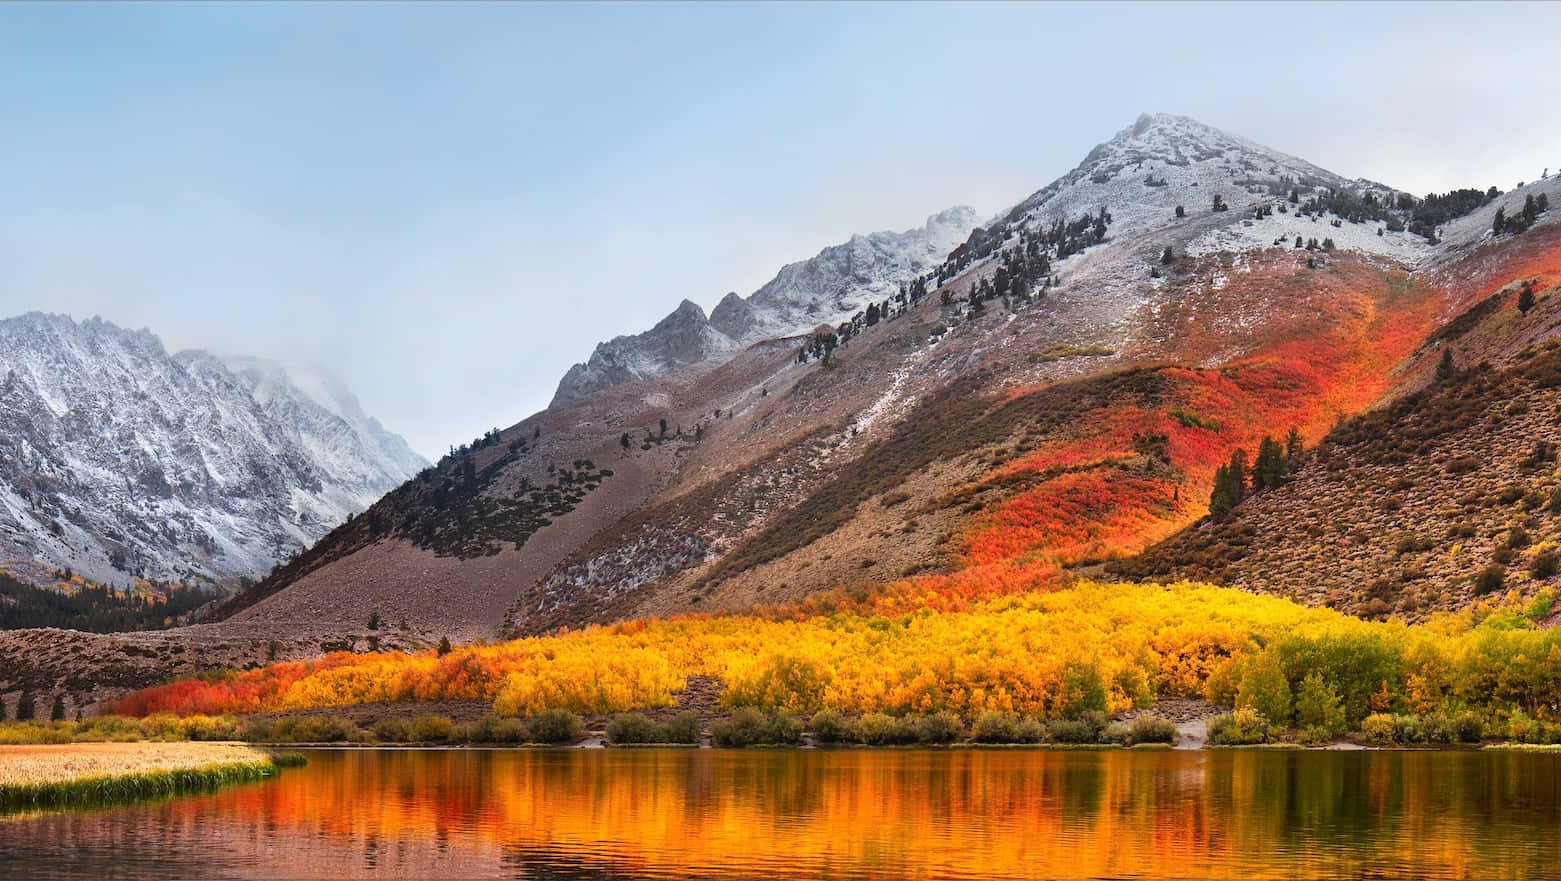 Enjoy the majestic view of High Sierra Wallpaper